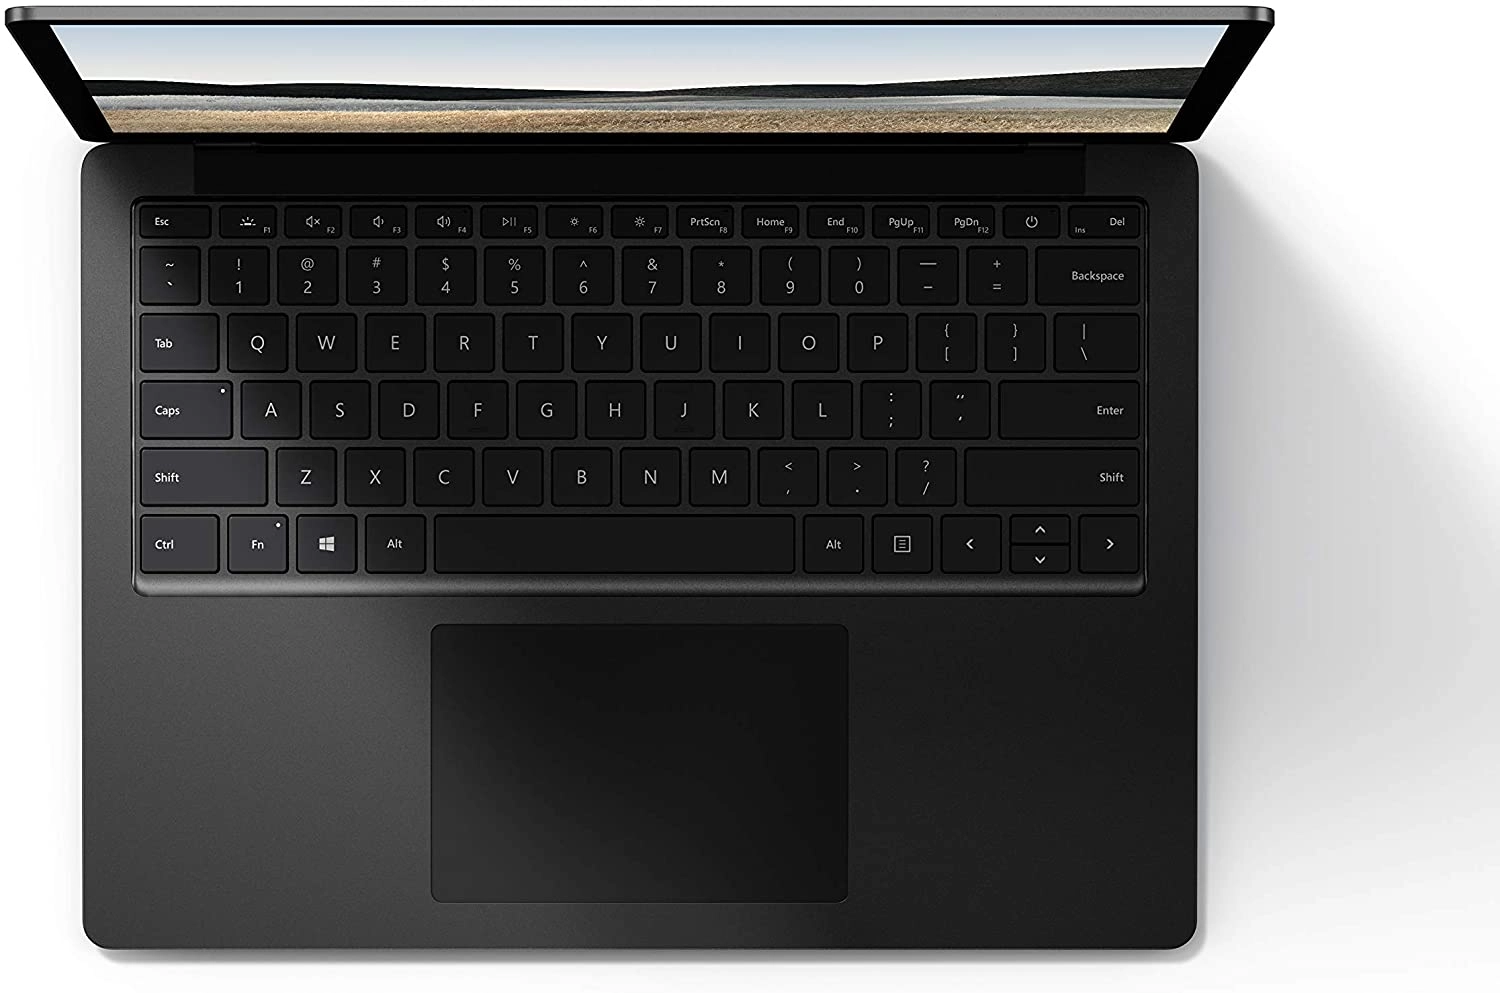 Microsoft Laptop 4 13 i5/8GB/512GB BLACK laptop image